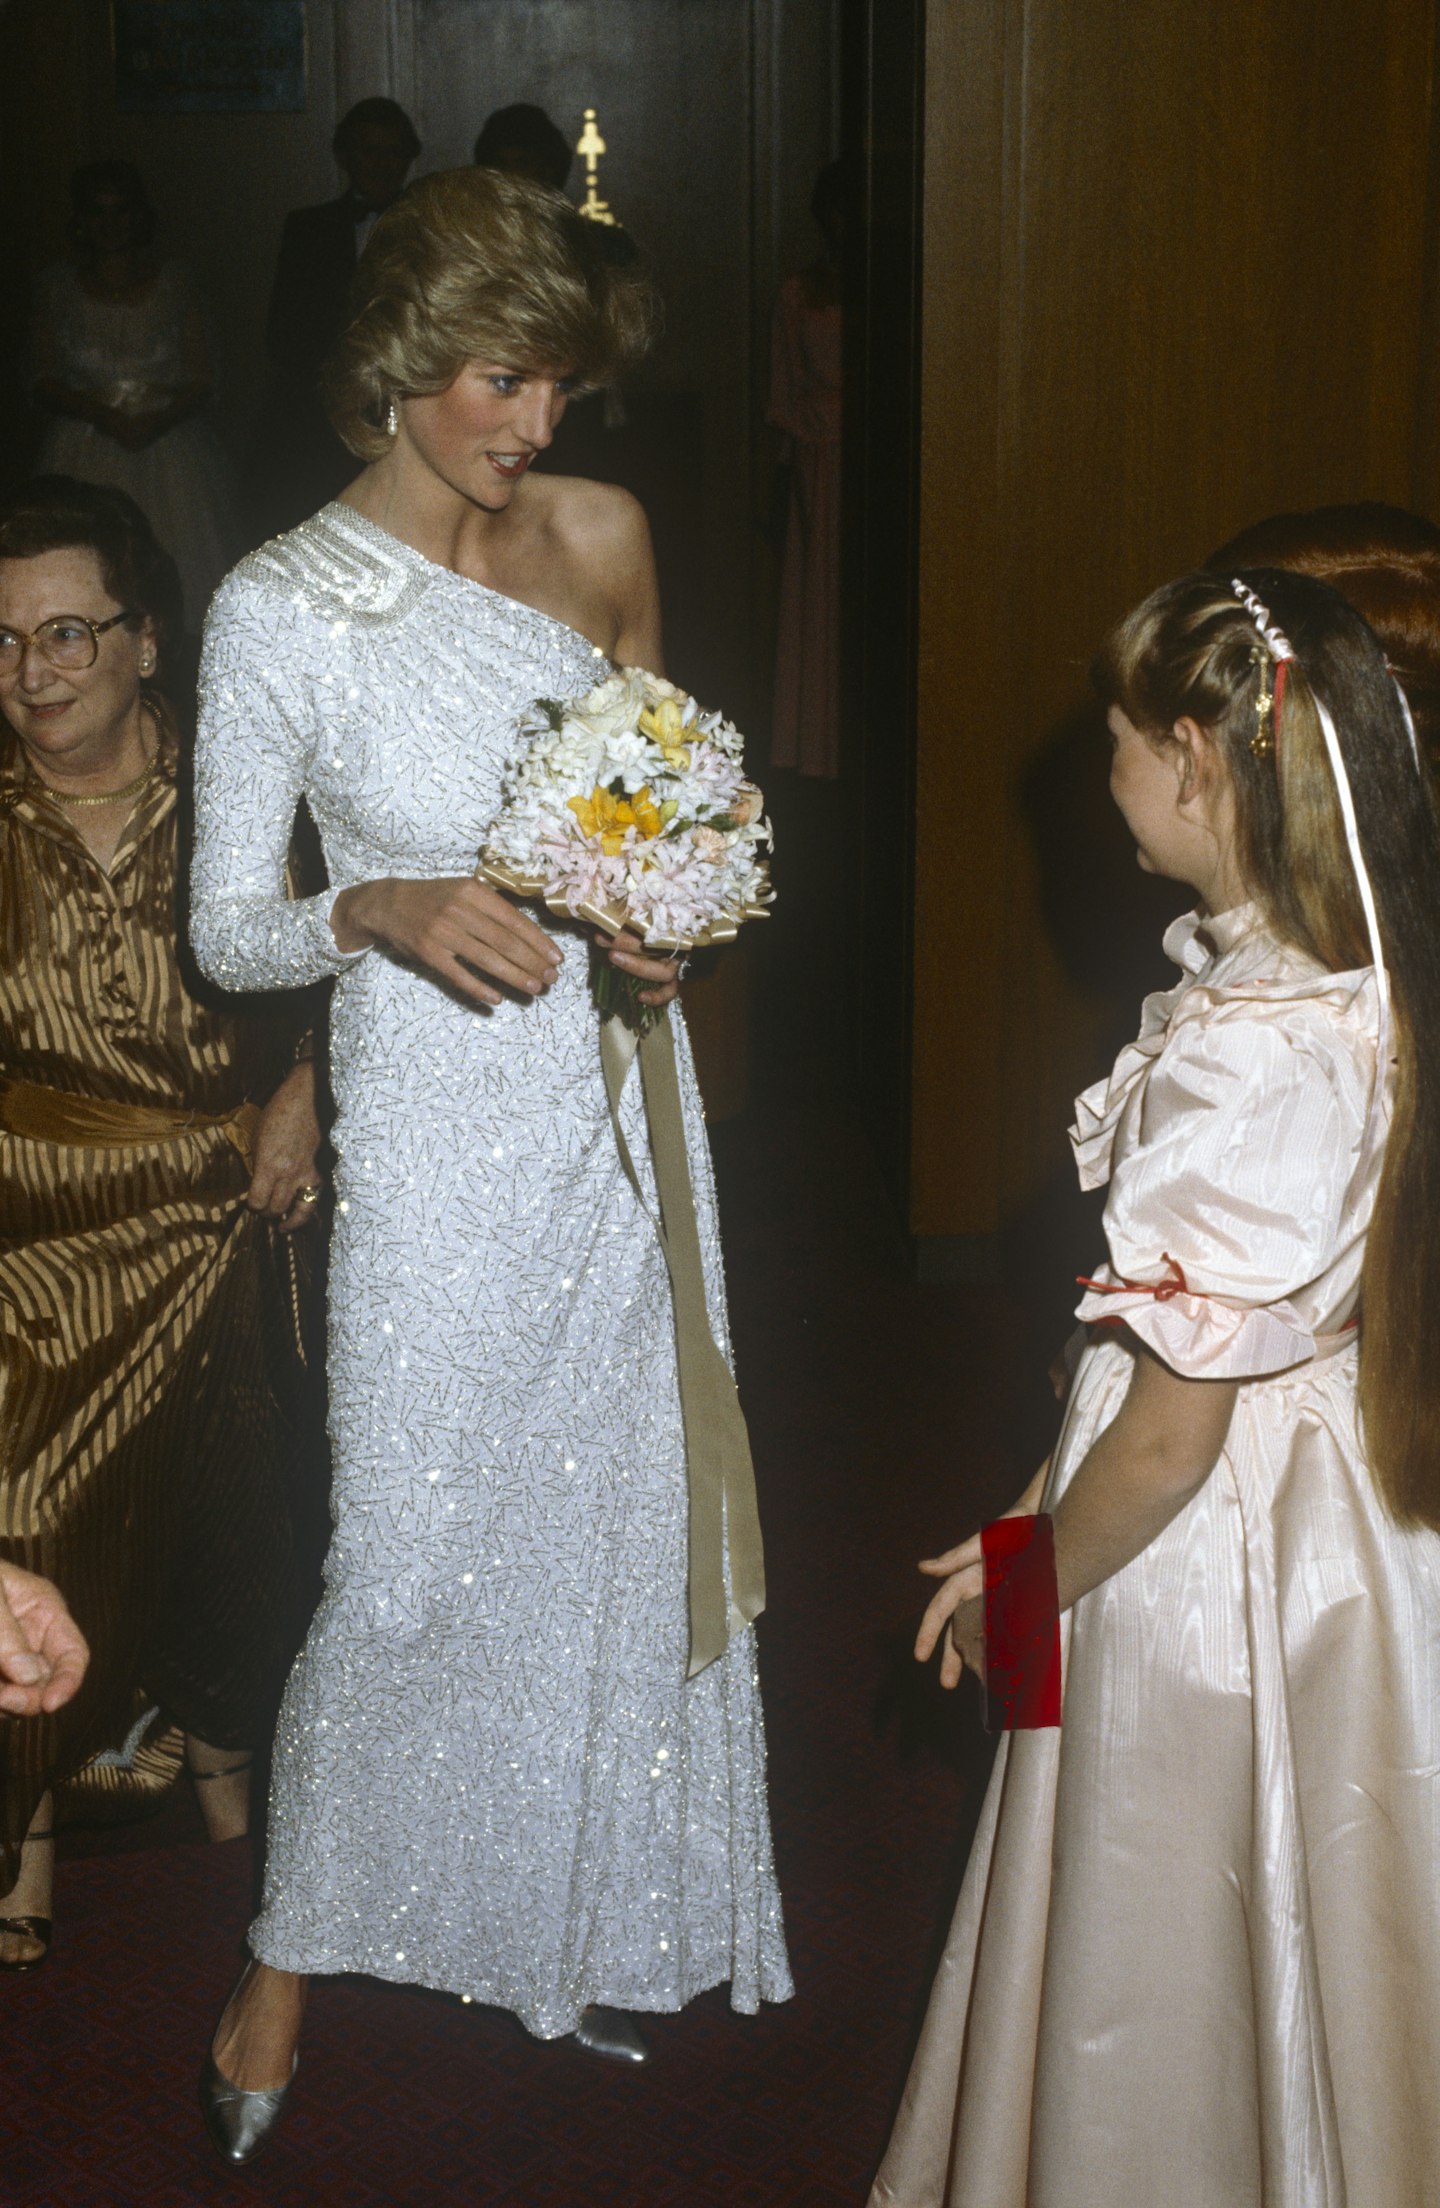 Princess Diana in 1983